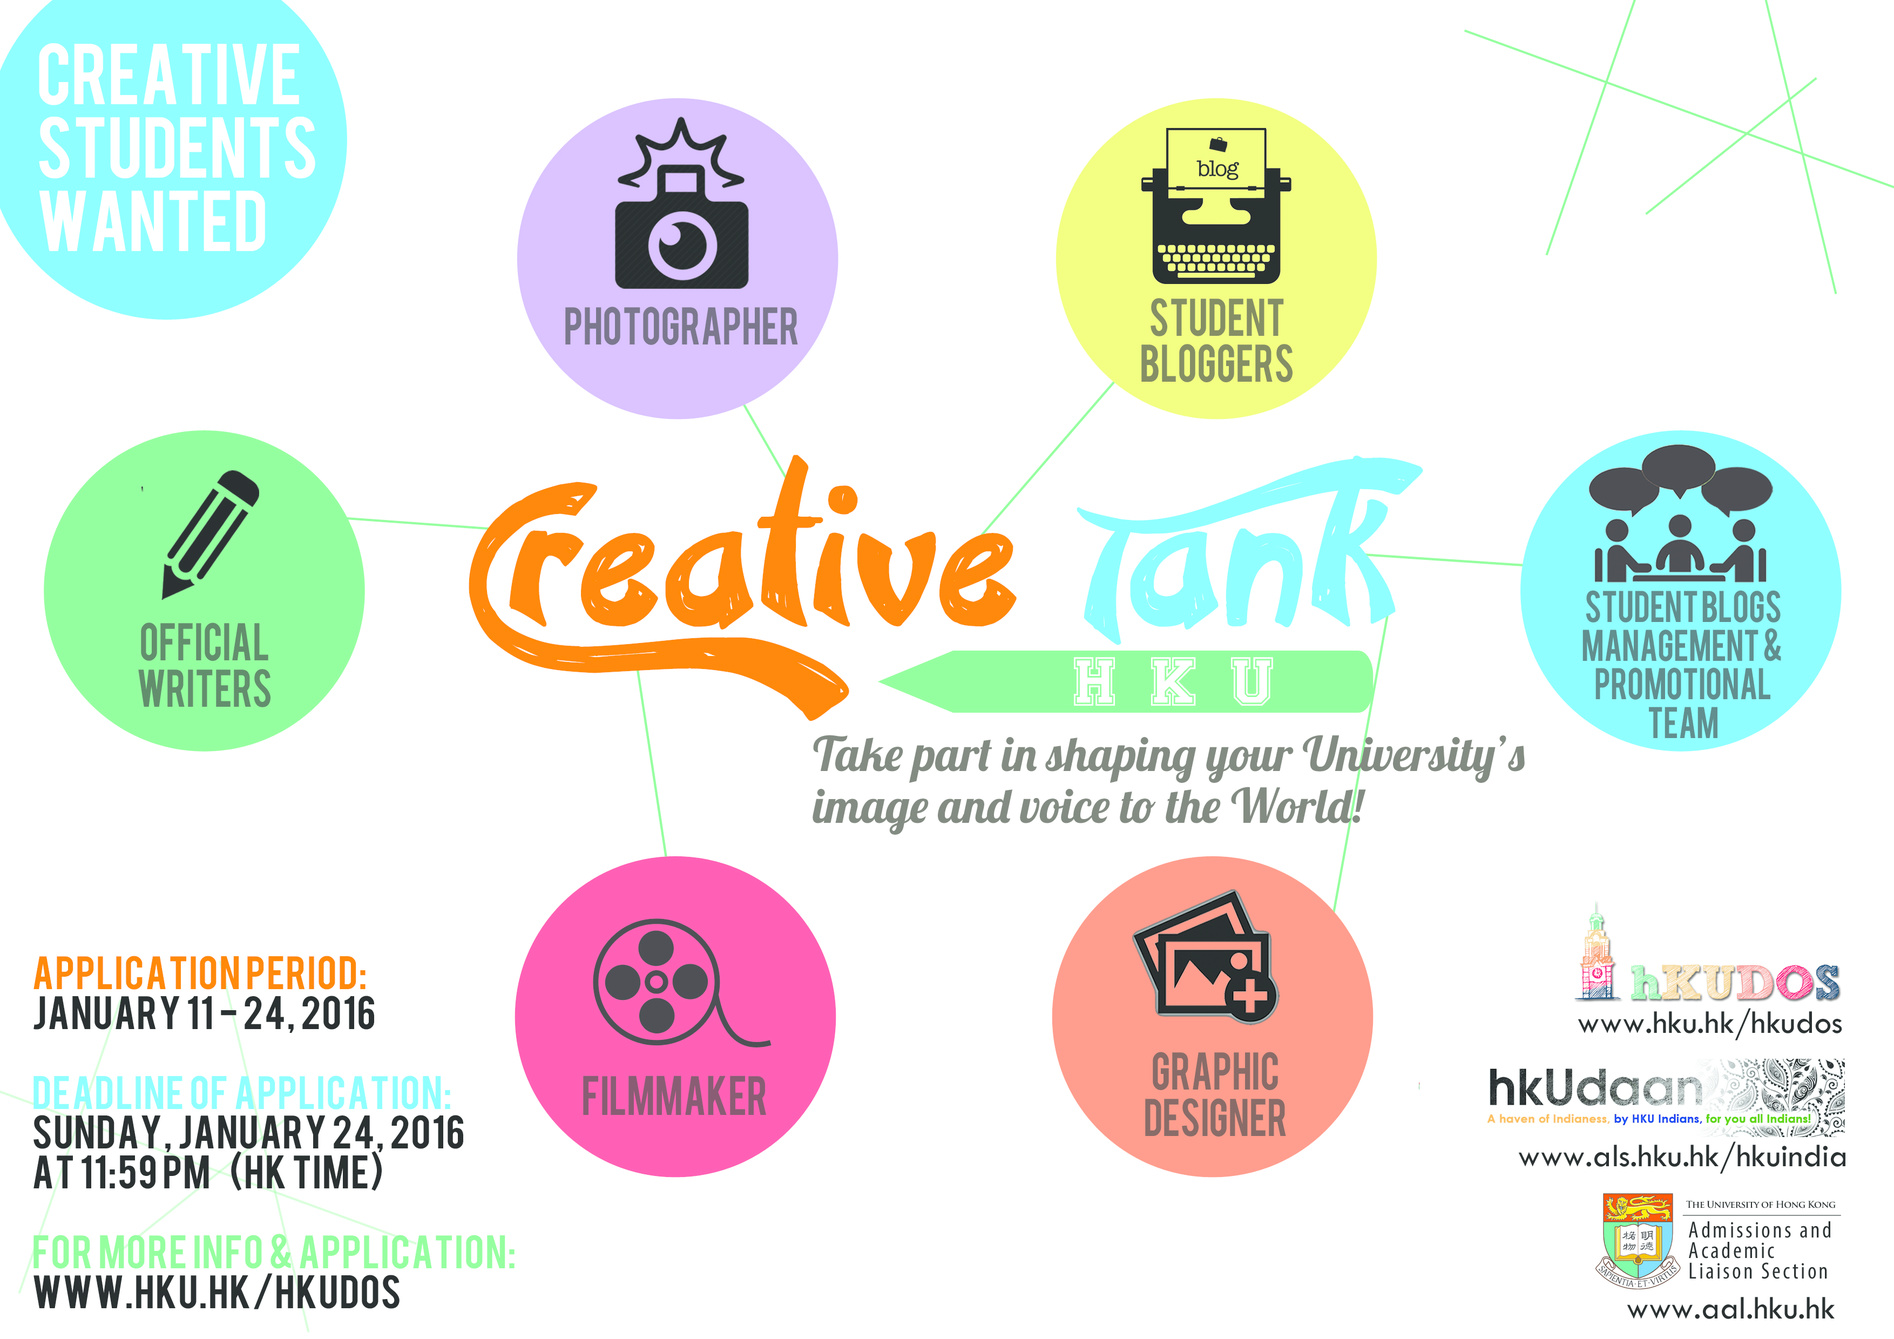 Creative Students Wanted: Join HKU Creative Tank